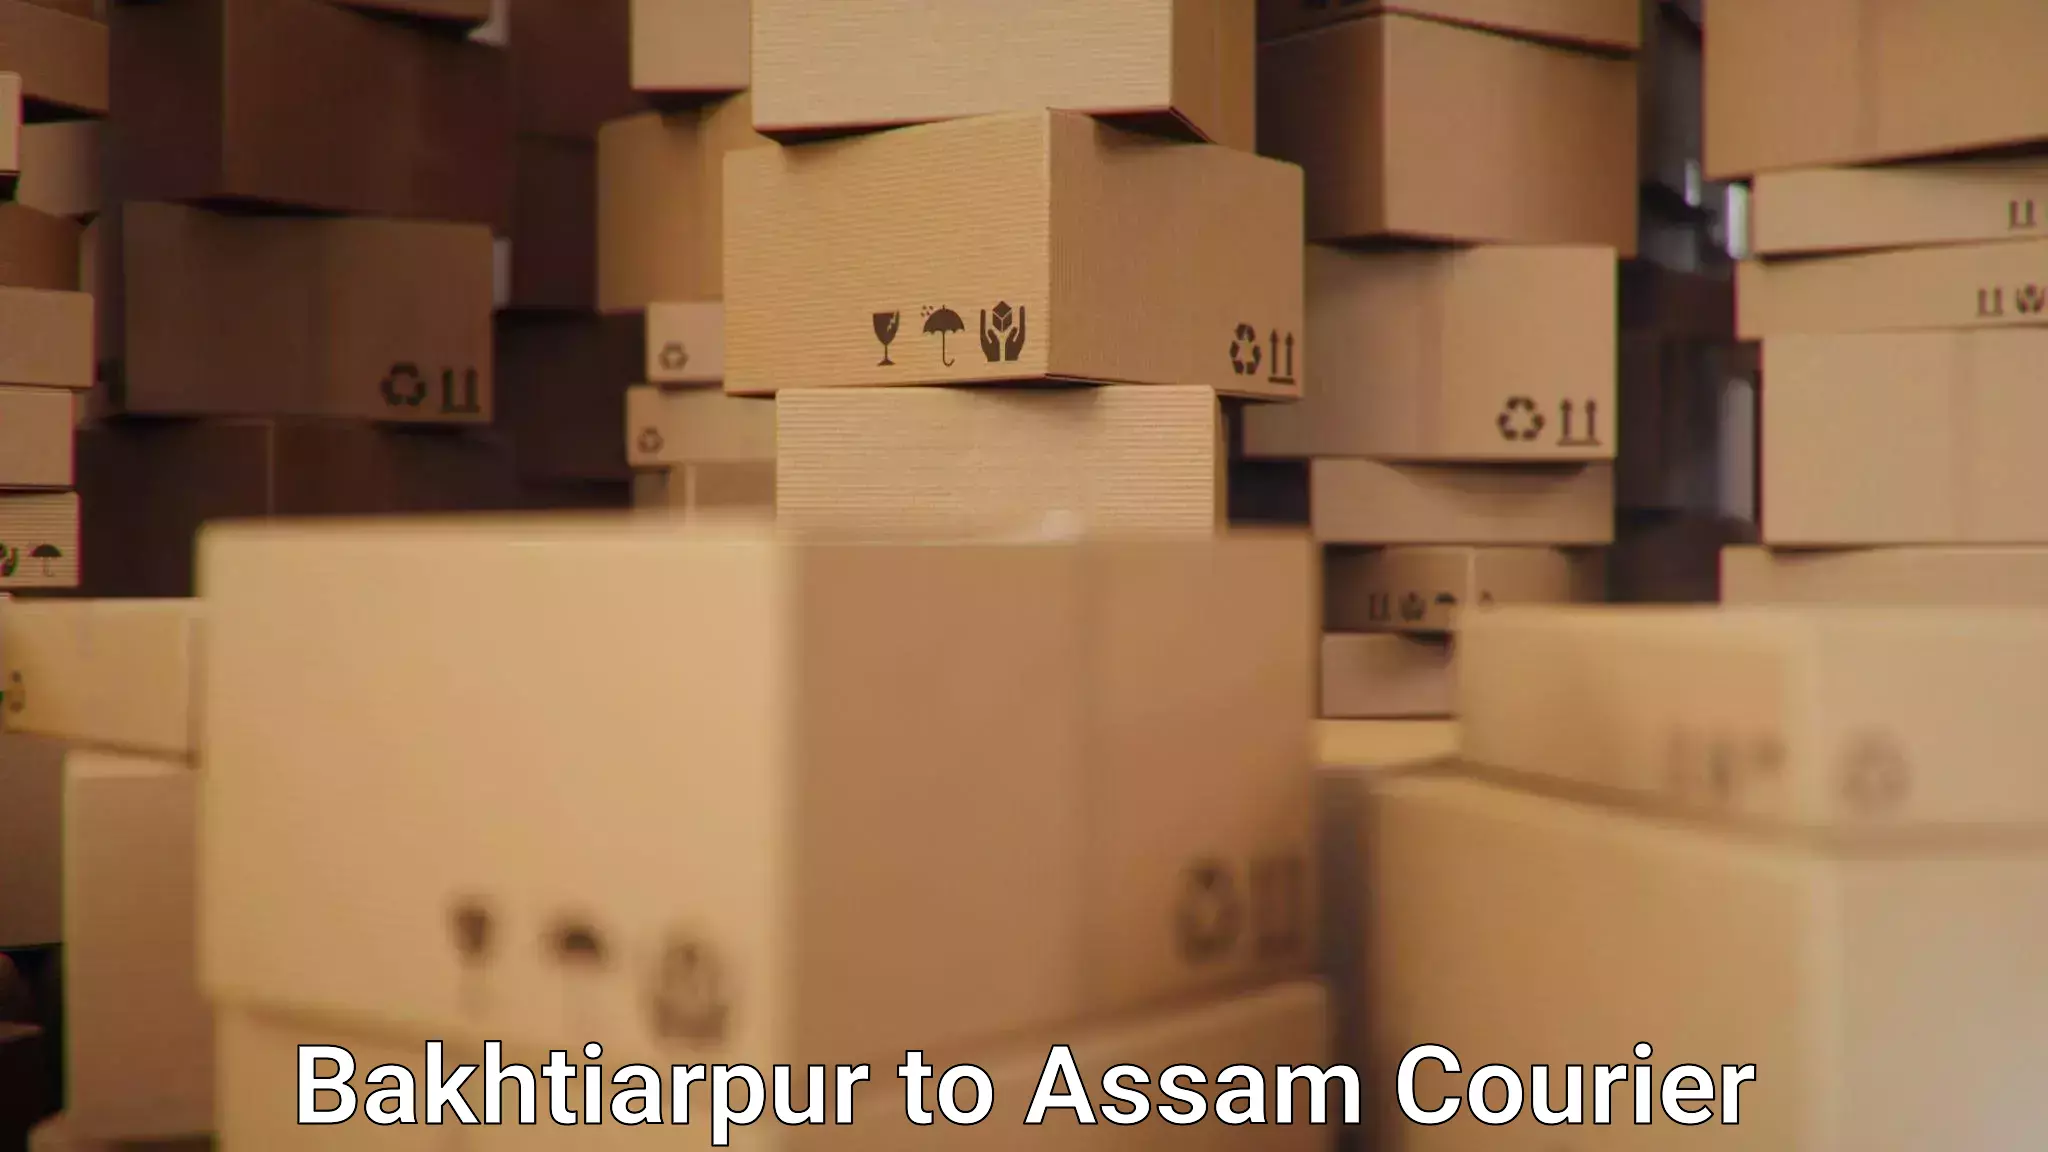 Courier service partnerships Bakhtiarpur to Chabua